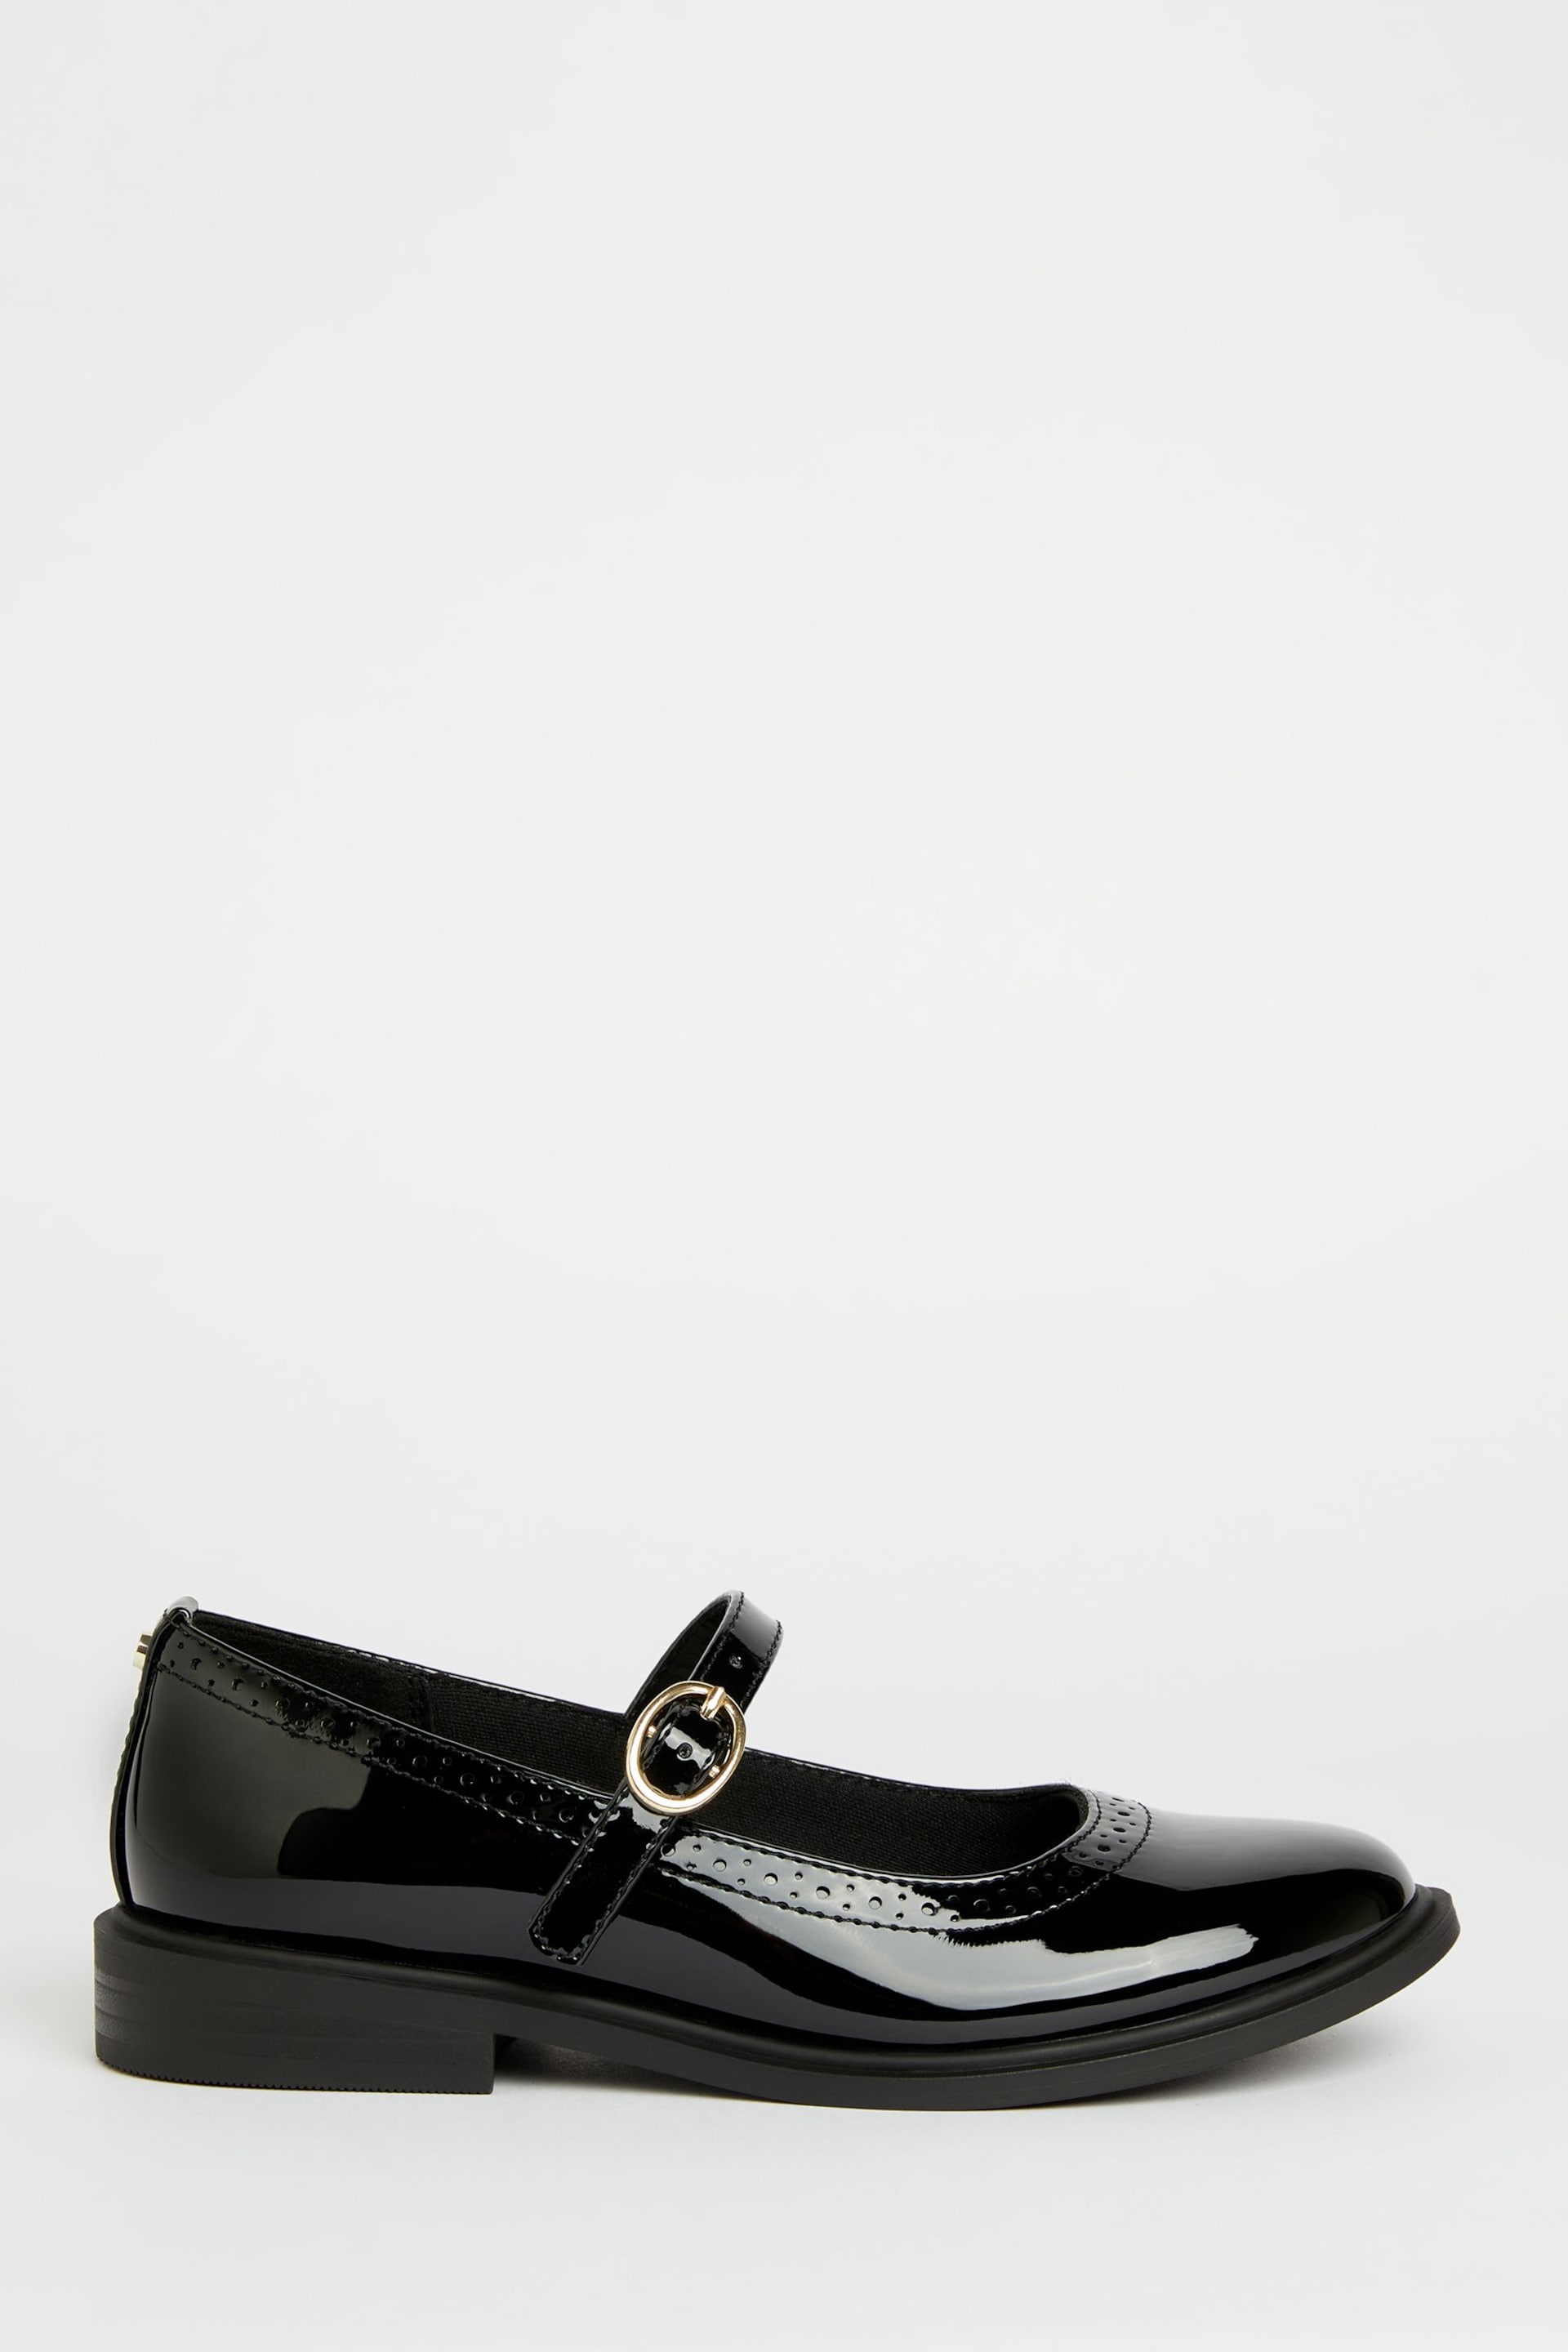 Lipsy Black Flat Dolly Shoe - Image 1 of 4